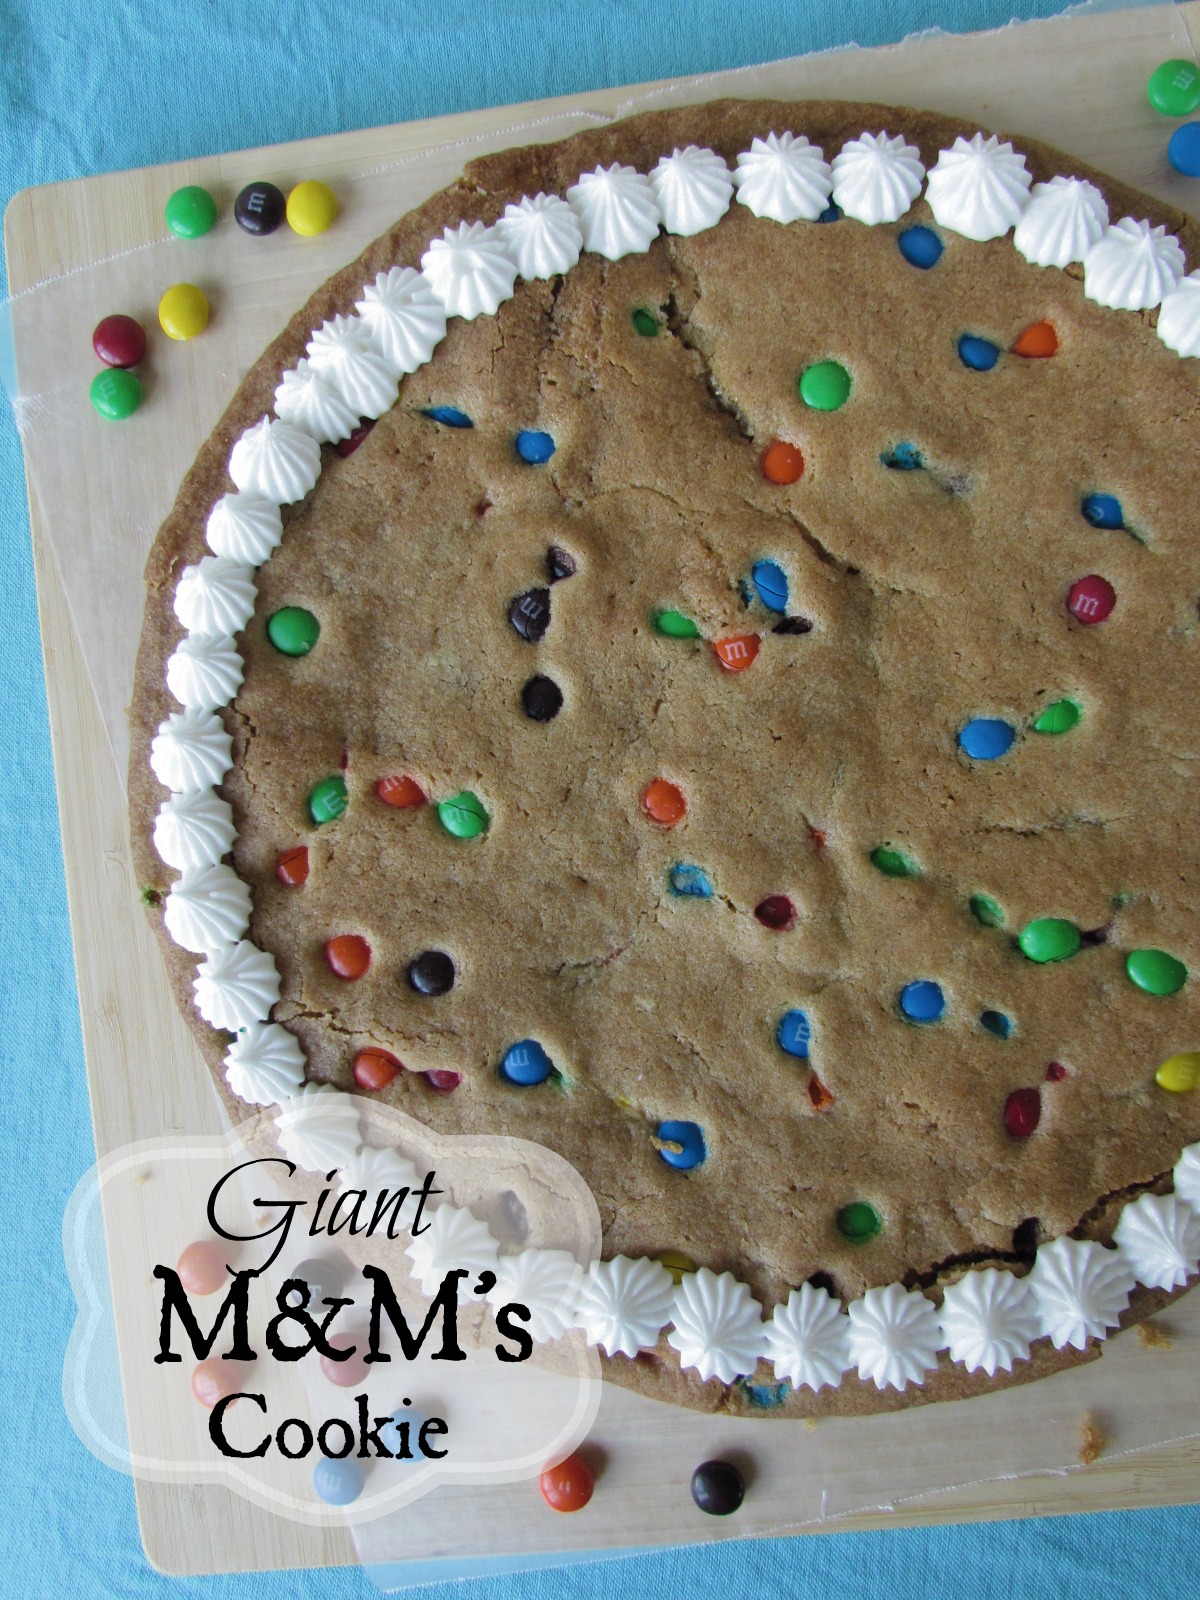 M&M's Cookie